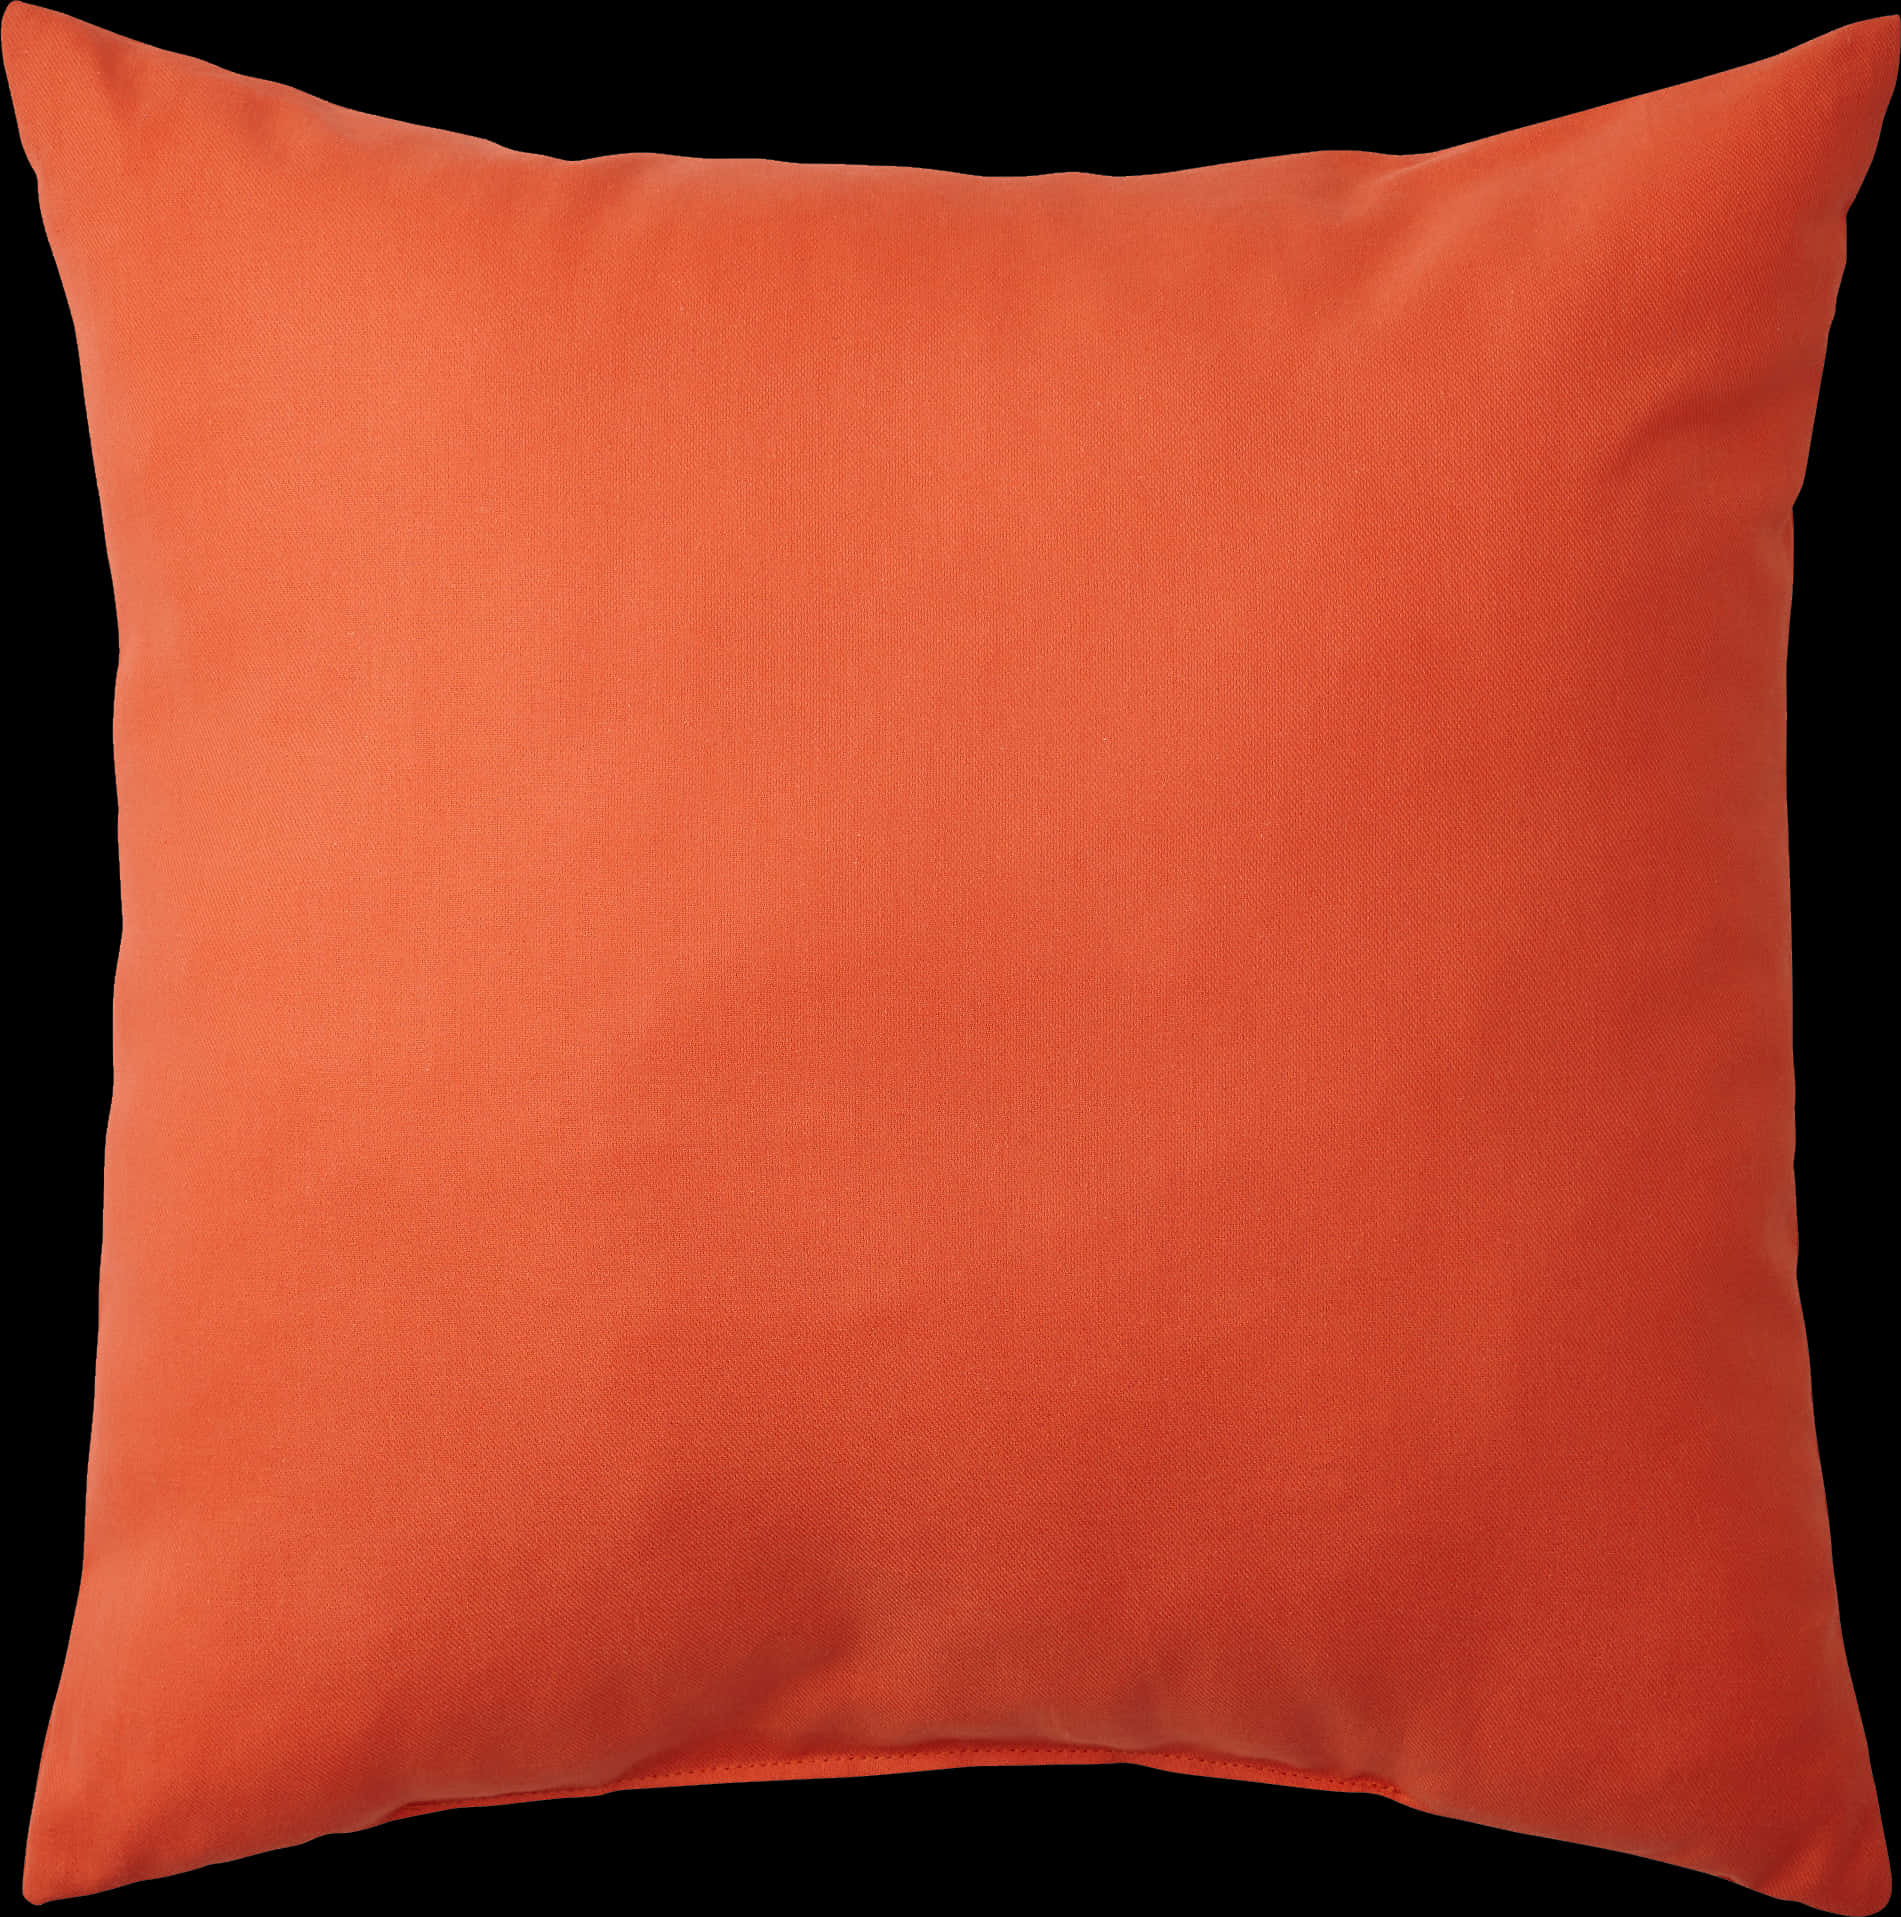 An Orange Pillow On A Black Background